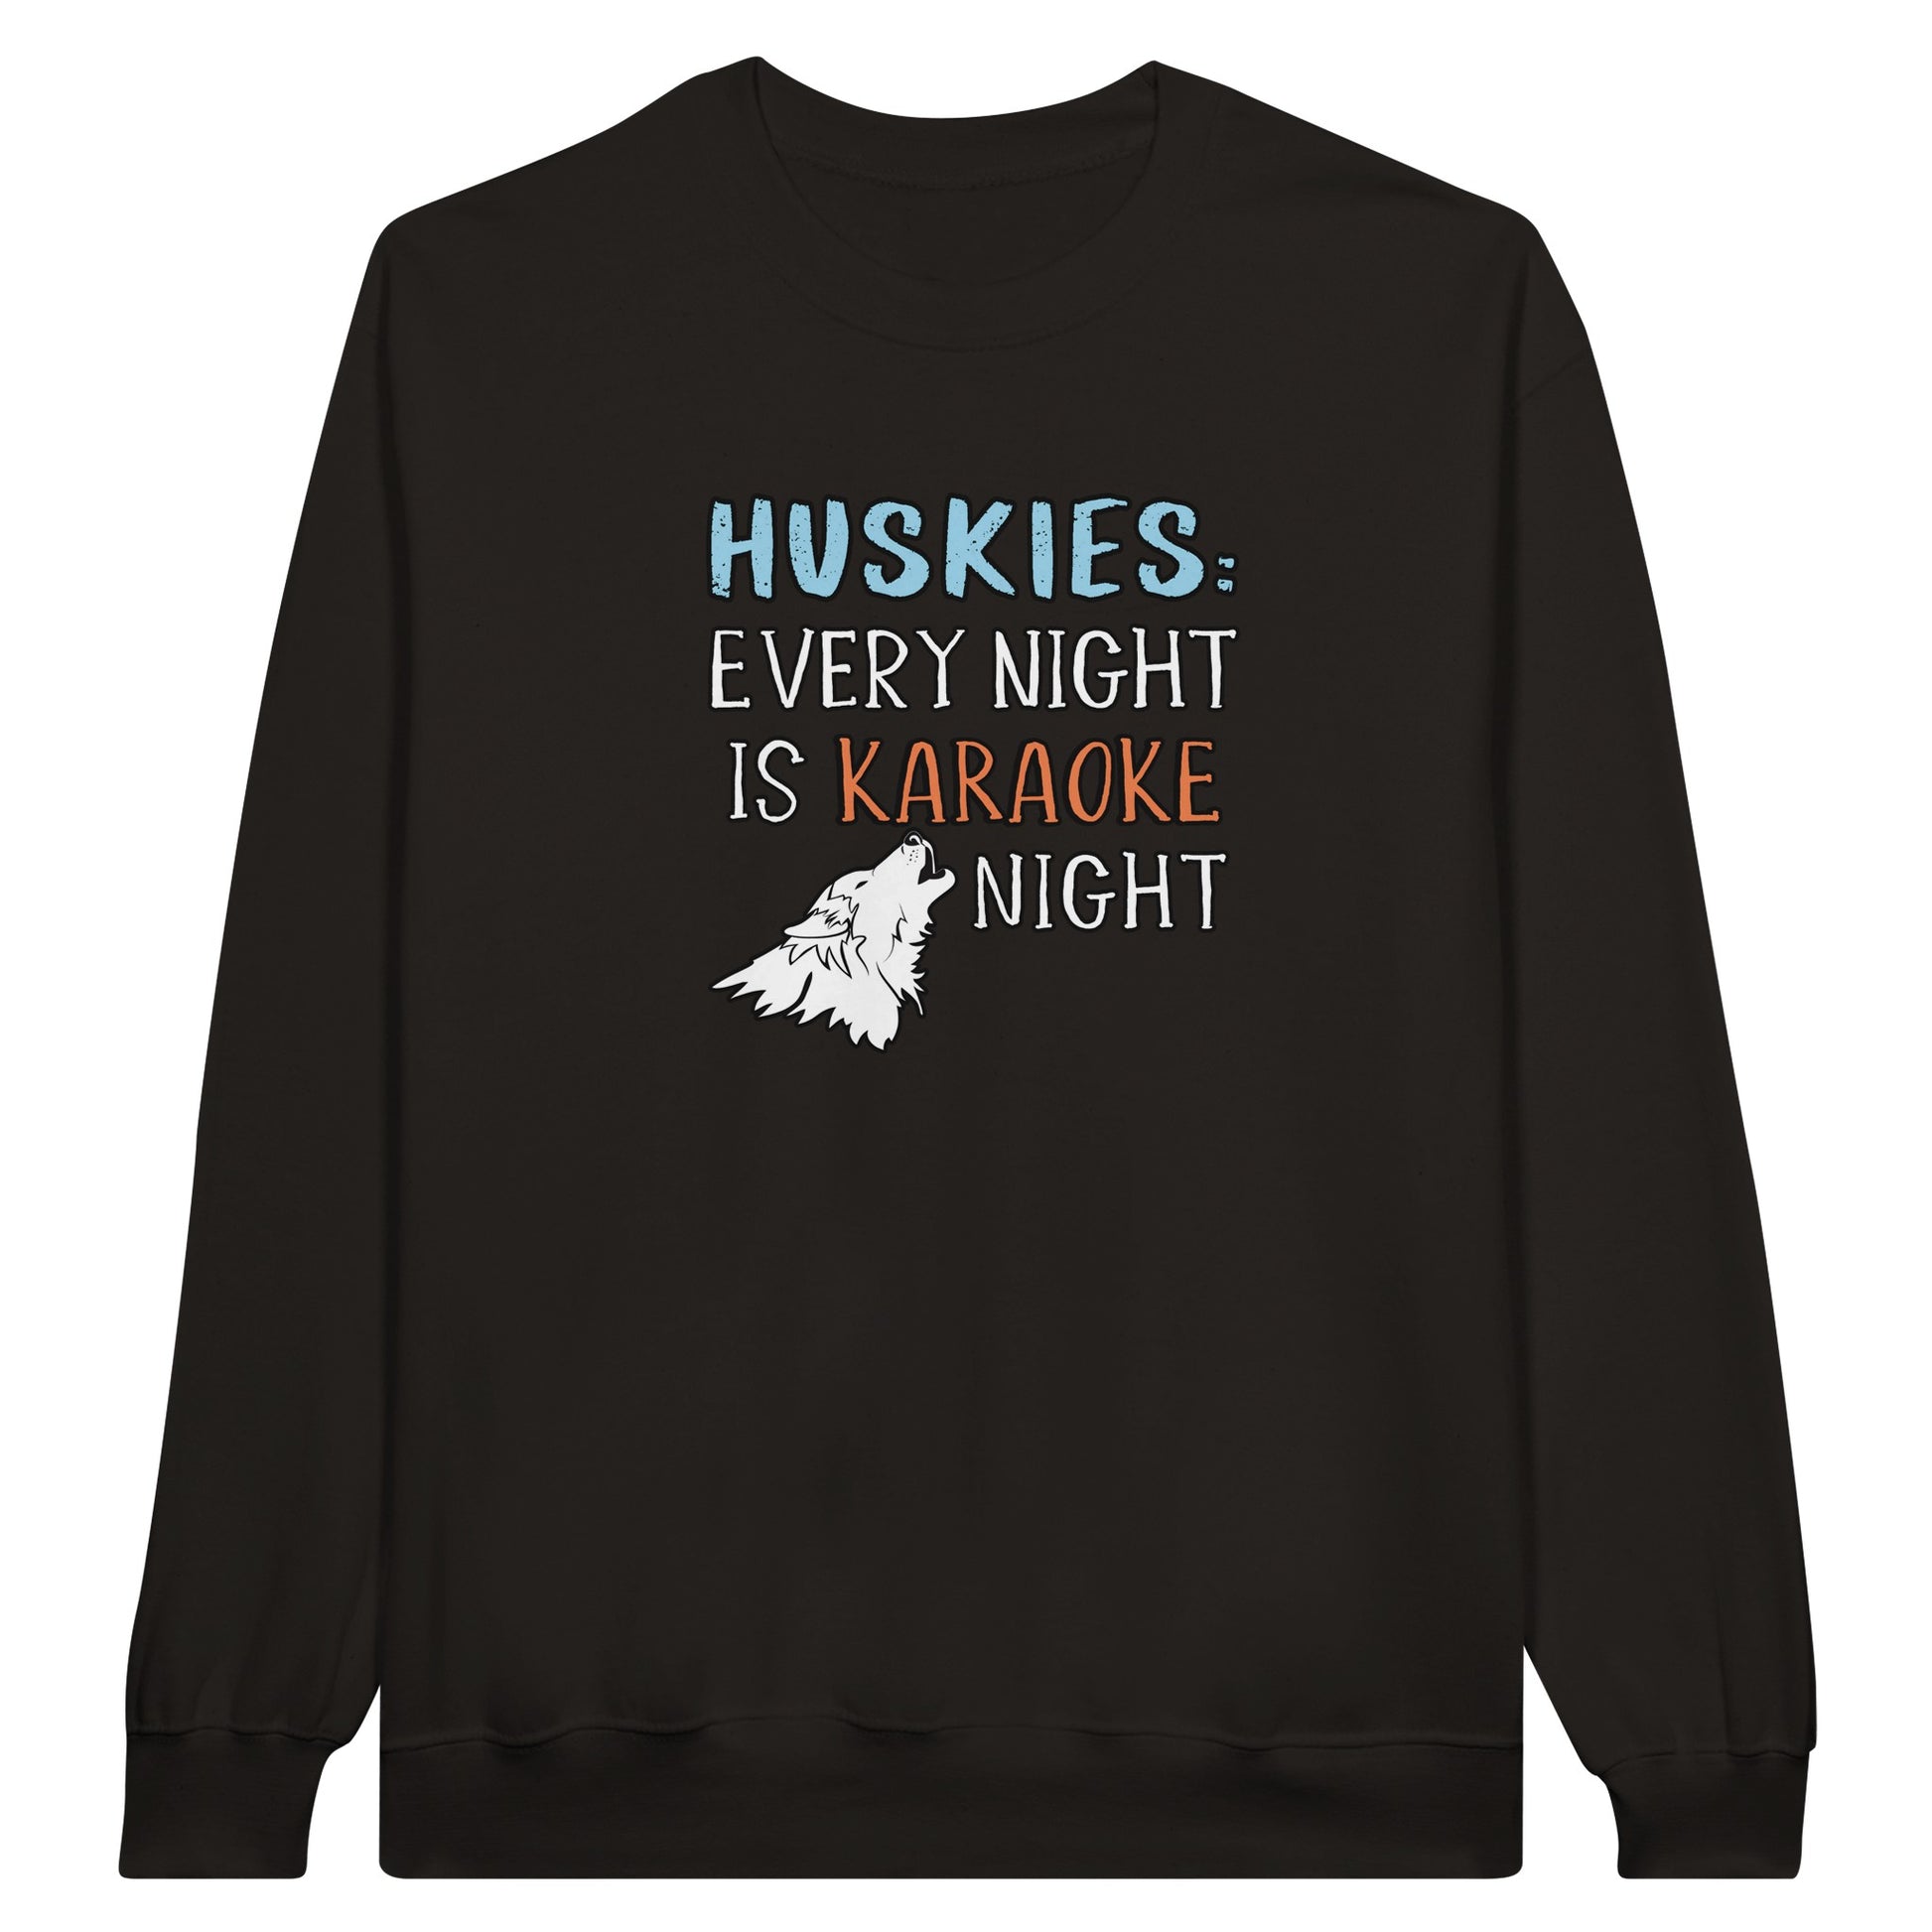 Unisex Sweatshirt with the design: "HUSKIES: Every Night Is Karaoke Night.". Color is black